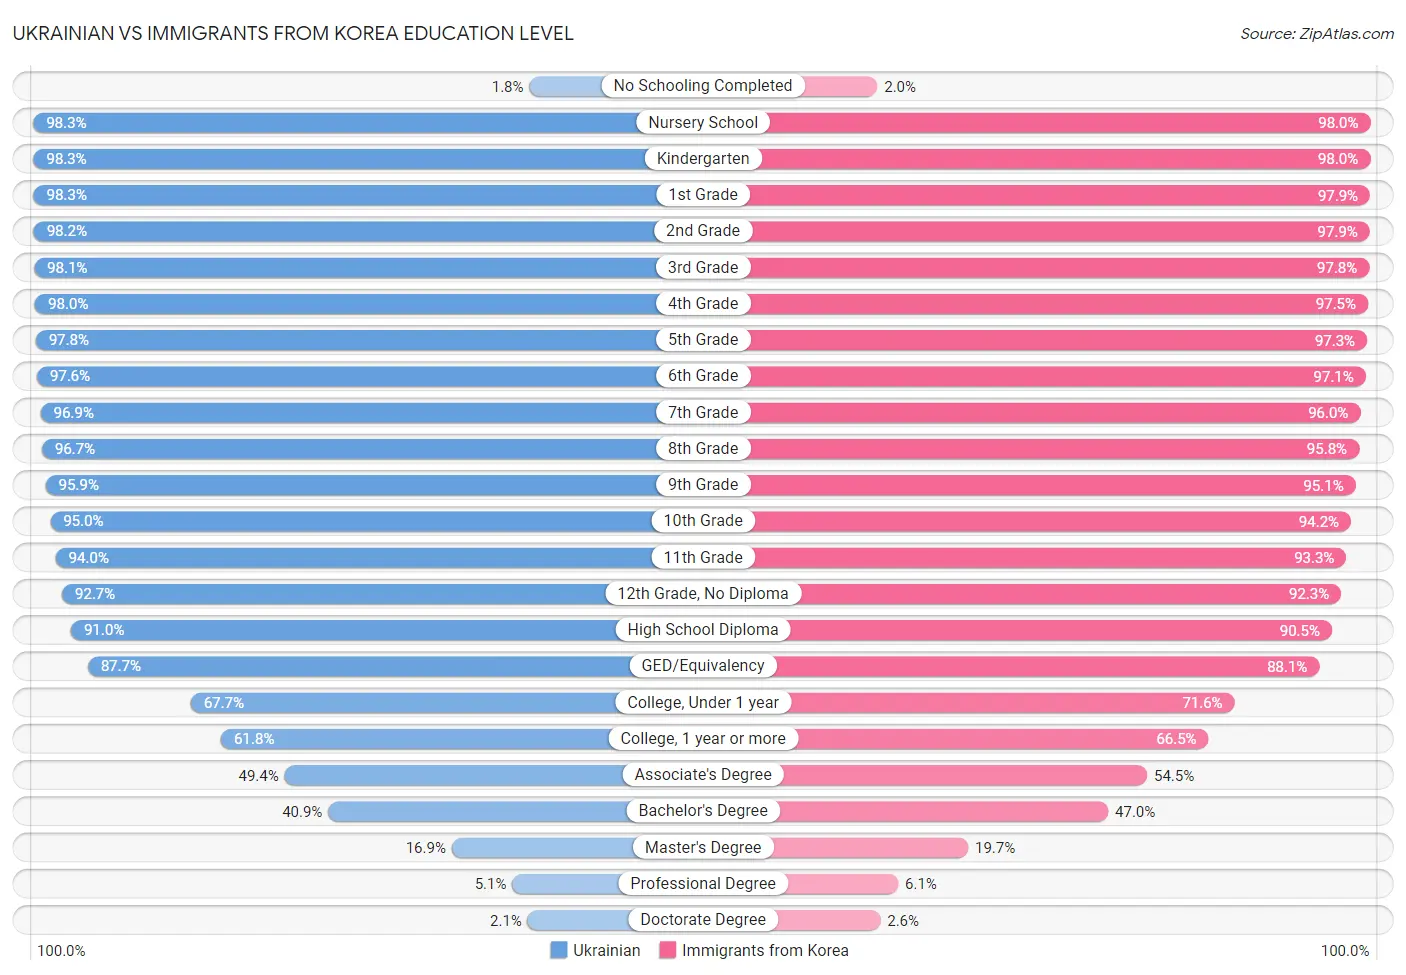 Ukrainian vs Immigrants from Korea Education Level